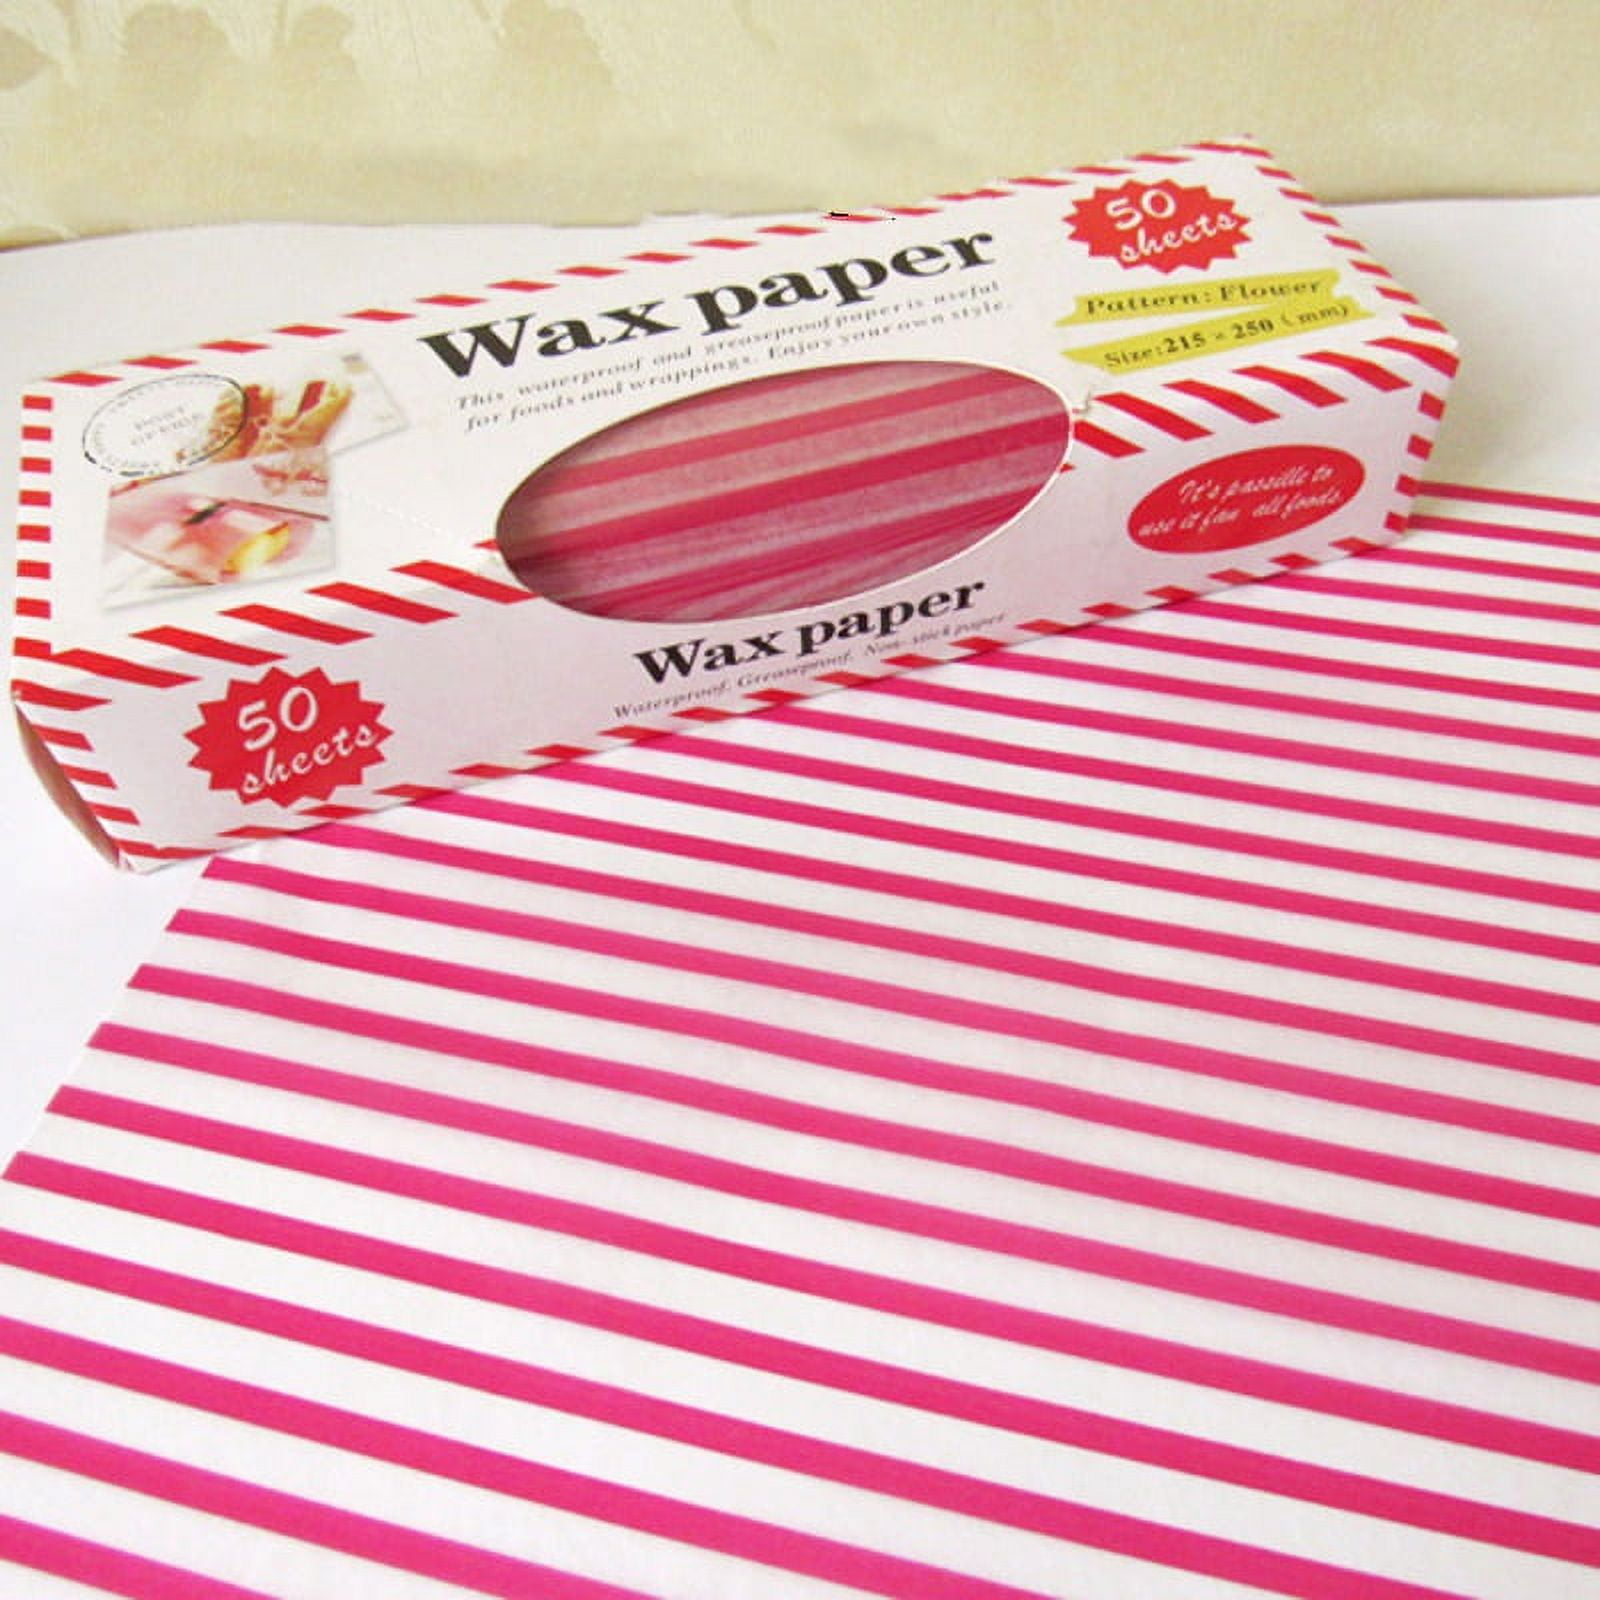 100 Pcs Hawaii Luau Wax Paper for Food, Wax Paper Sheets Deli Paper Sandwich Wrap Candy Cookies Wraps, Waterproof Oil-proof Picnic Basket Liners